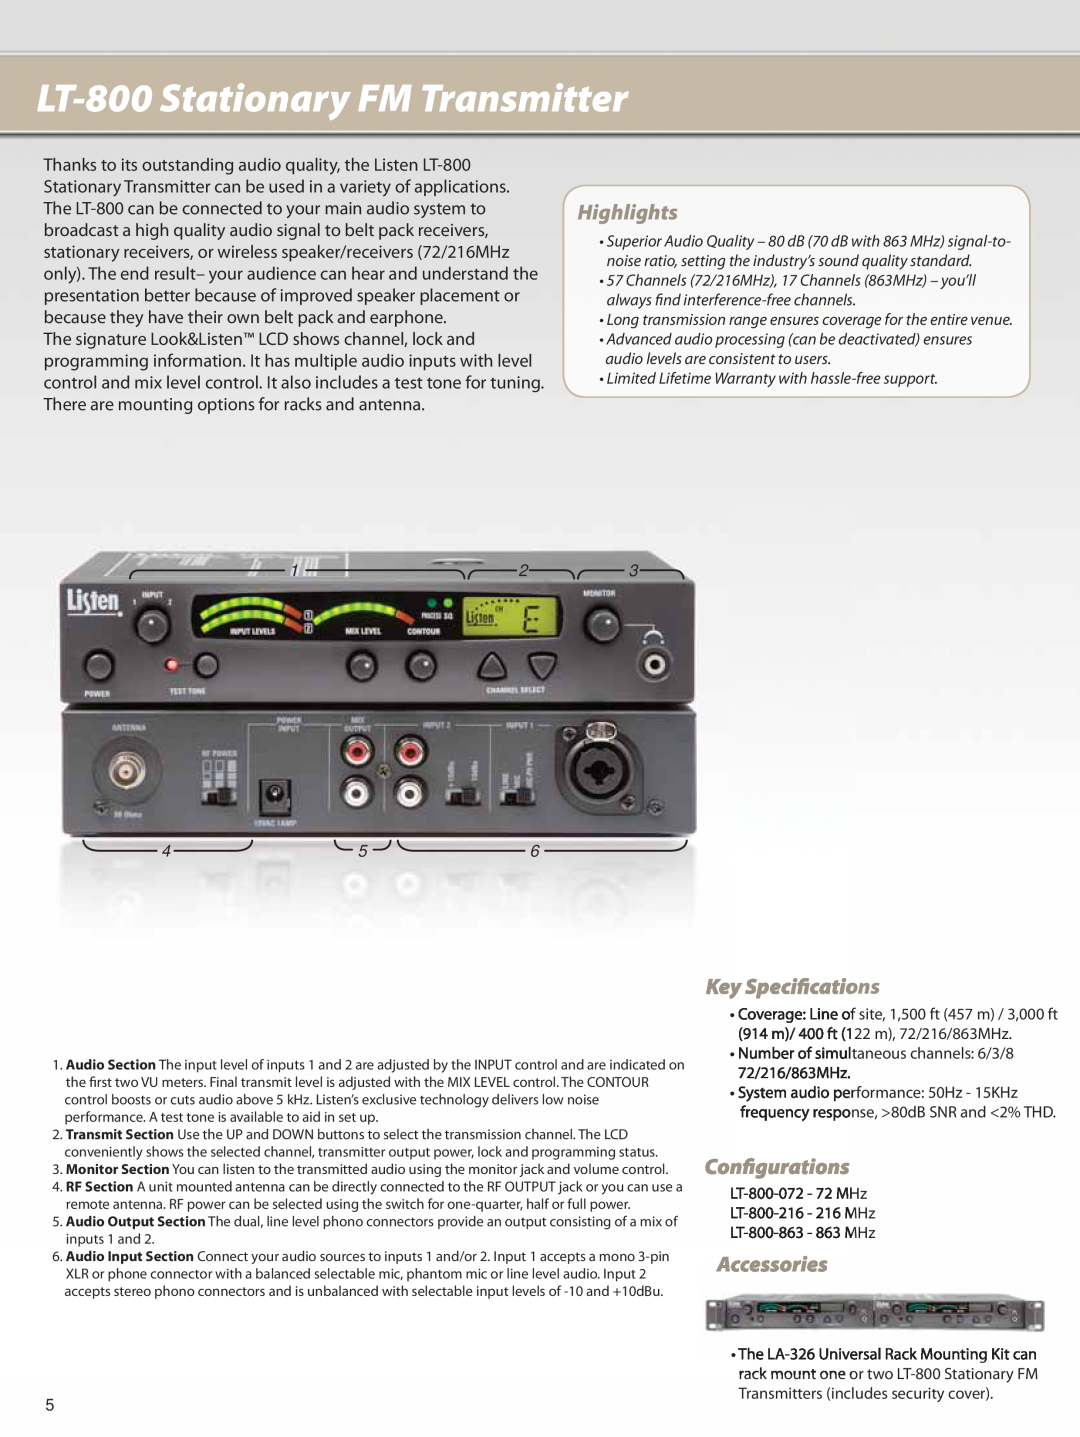 Listen Technologies LA-101 LT-800Stationary FM Transmitter, Highlights, Key Specifications, Configurations, Accessories 